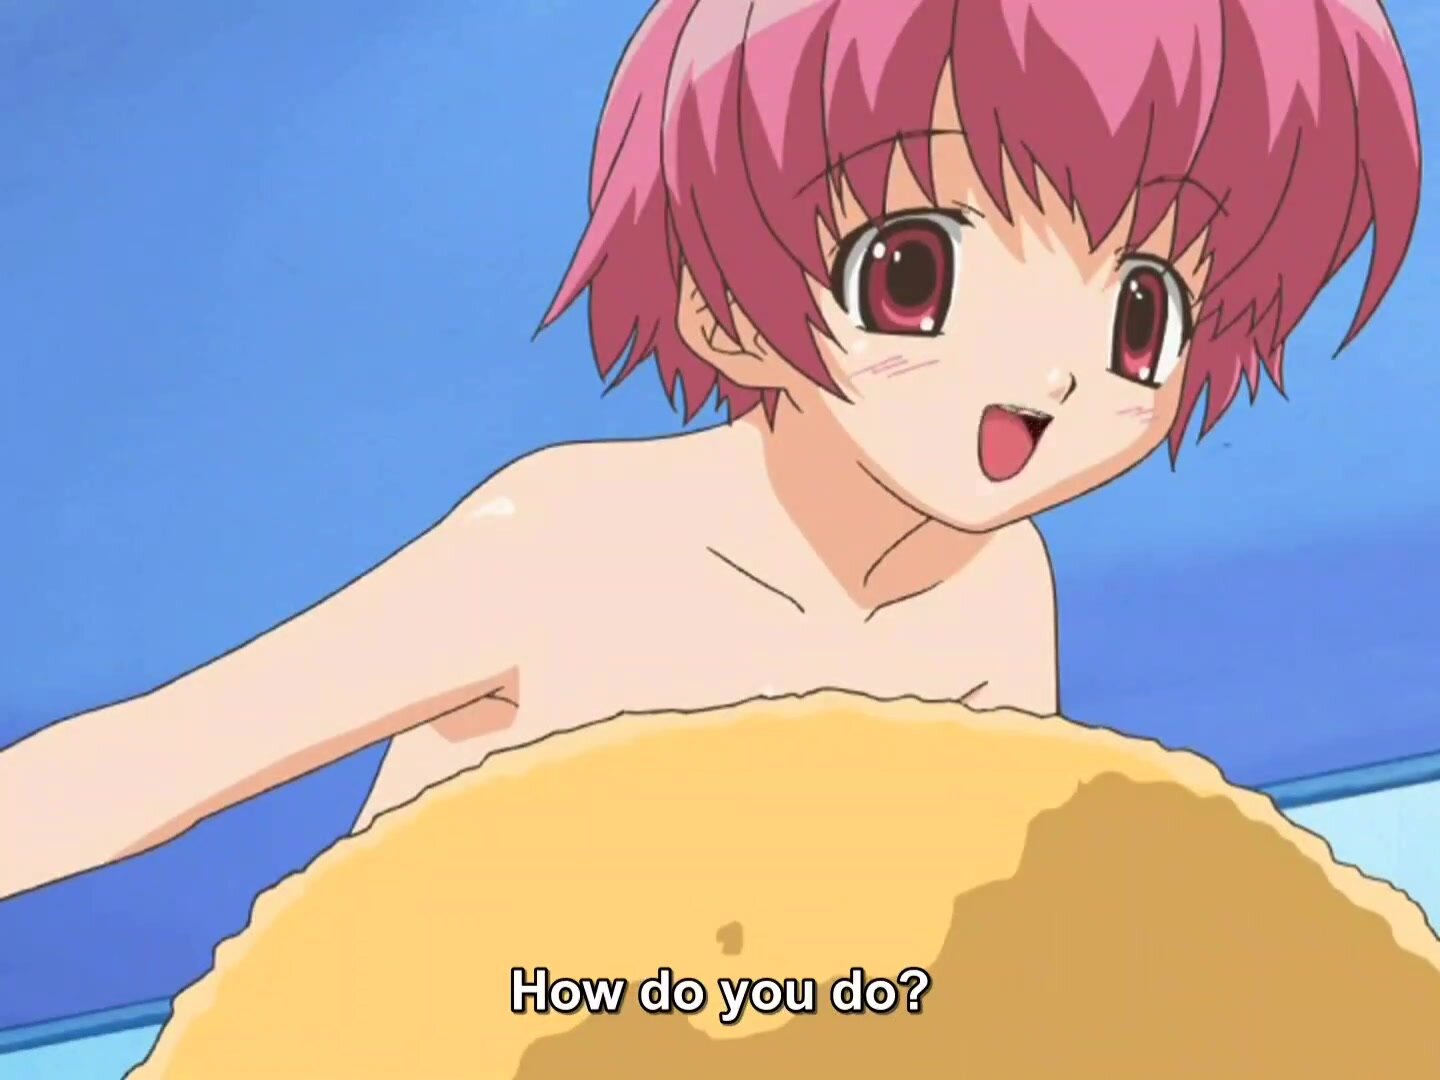 Naked anime girl censored in funny ways